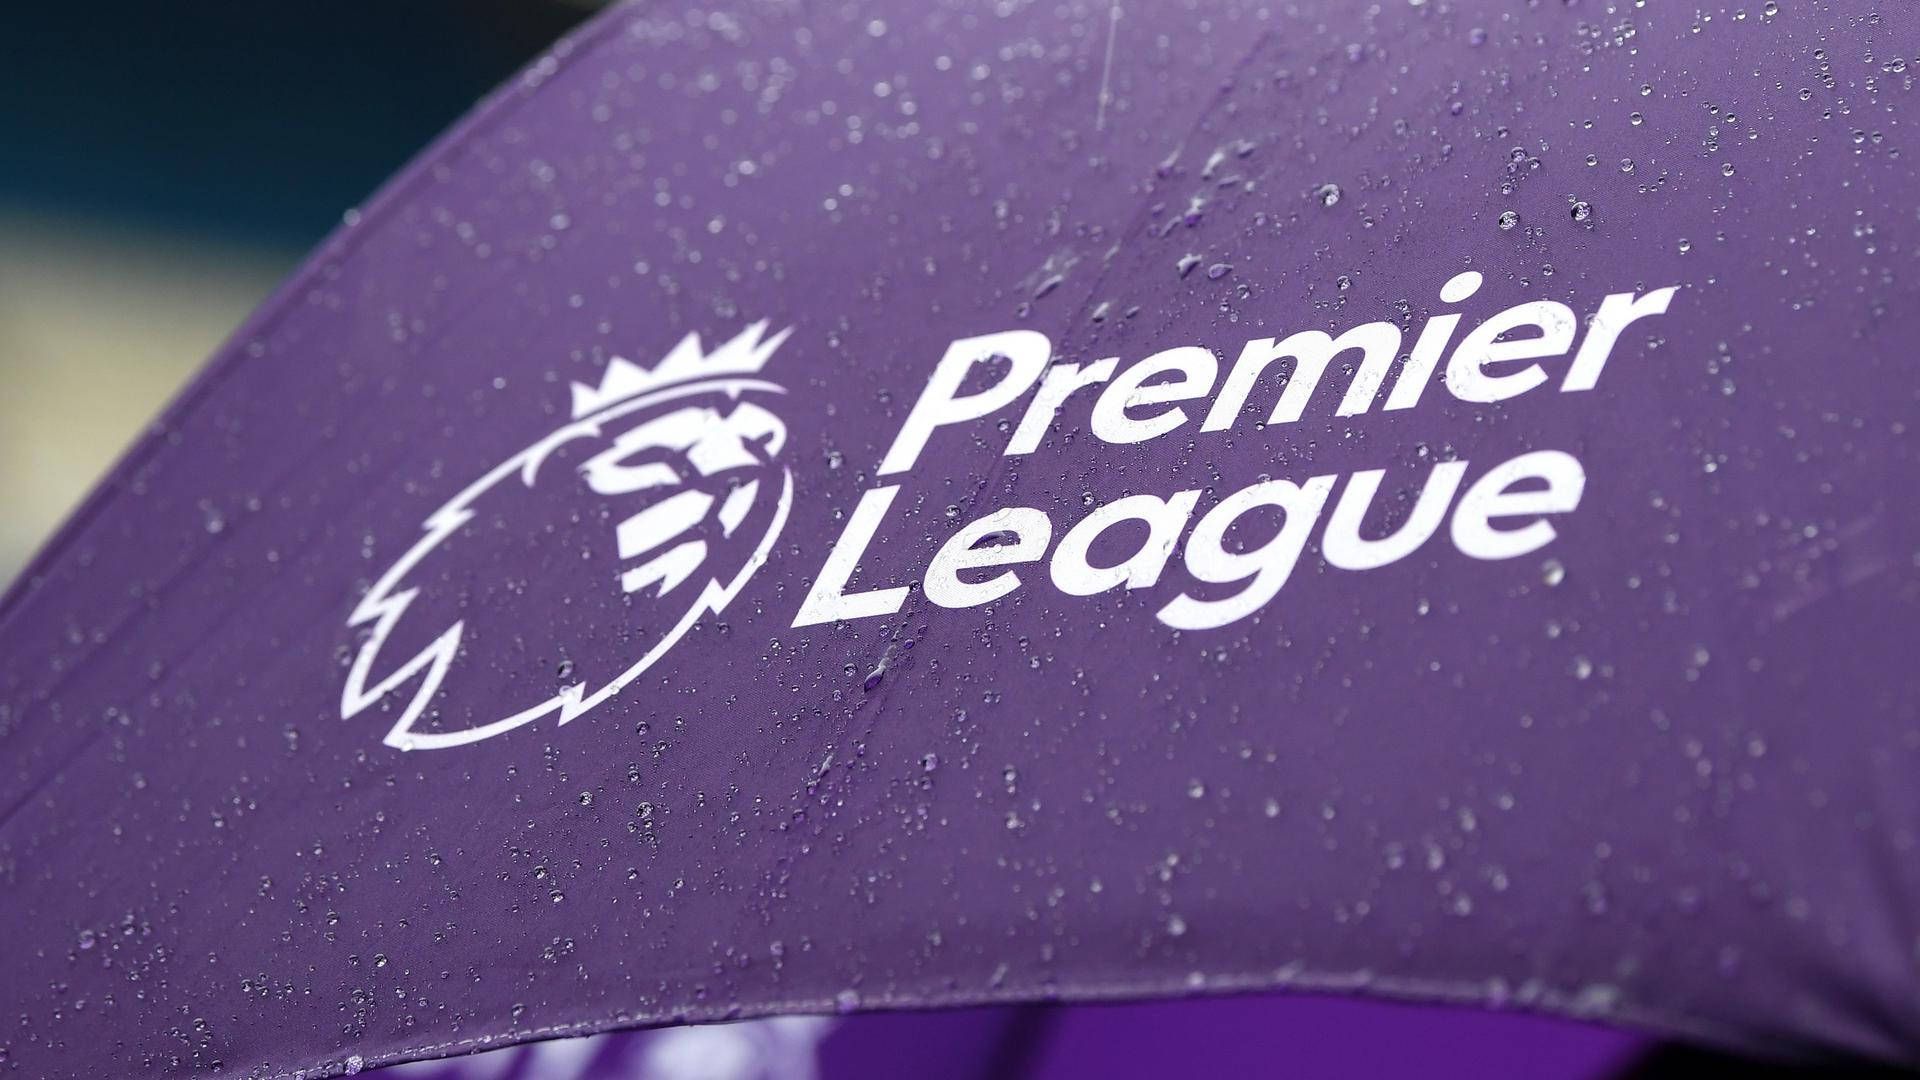 Premier League On Umbrella